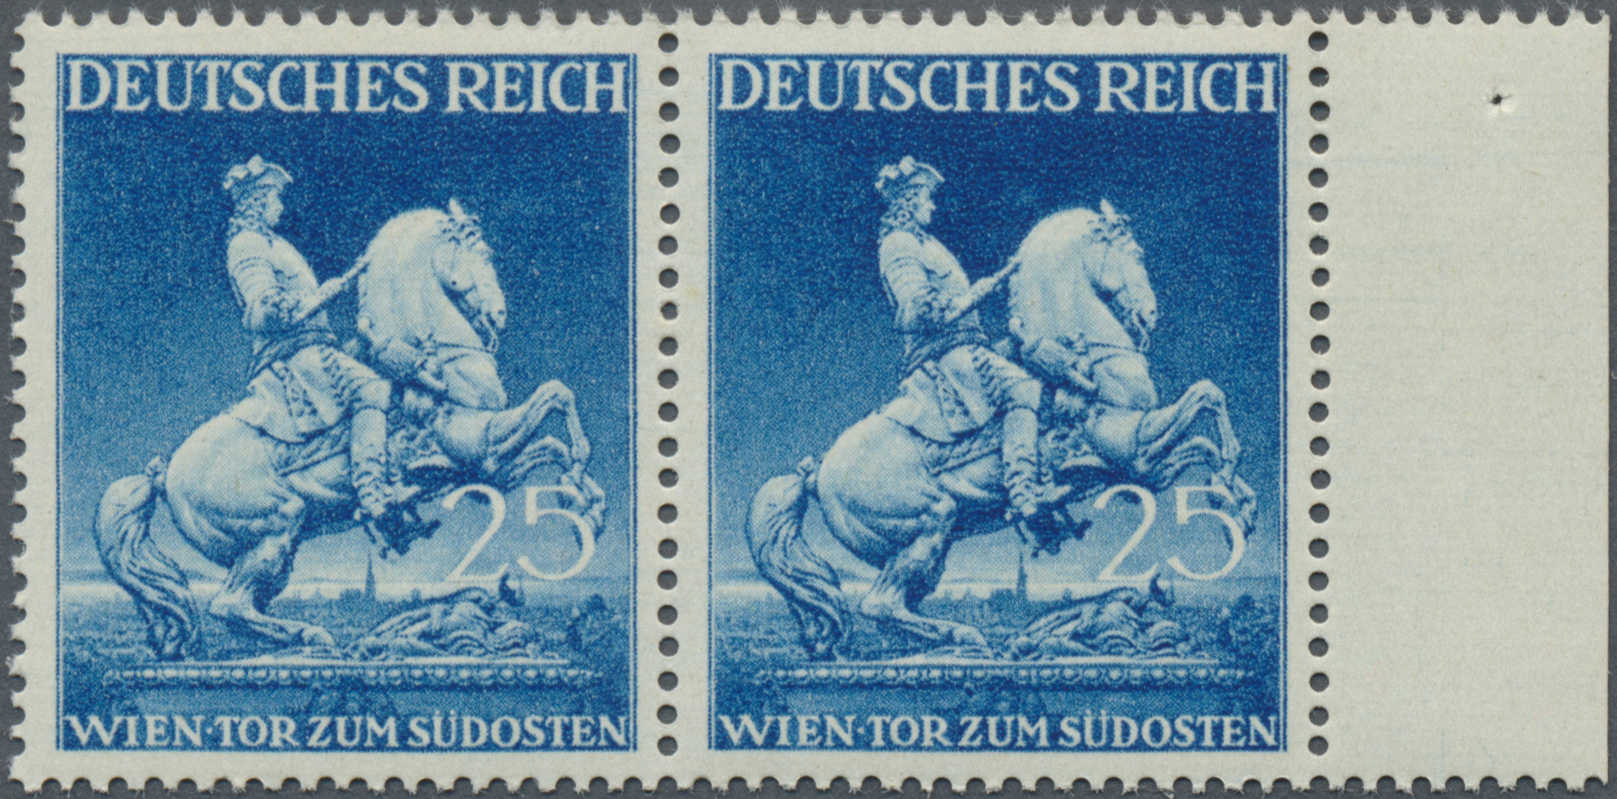 Lot 03435 - Deutsches Reich - 3. Reich  -  Auktionshaus Christoph Gärtner GmbH & Co. KG 53rd AUCTION - Day 3 Germany